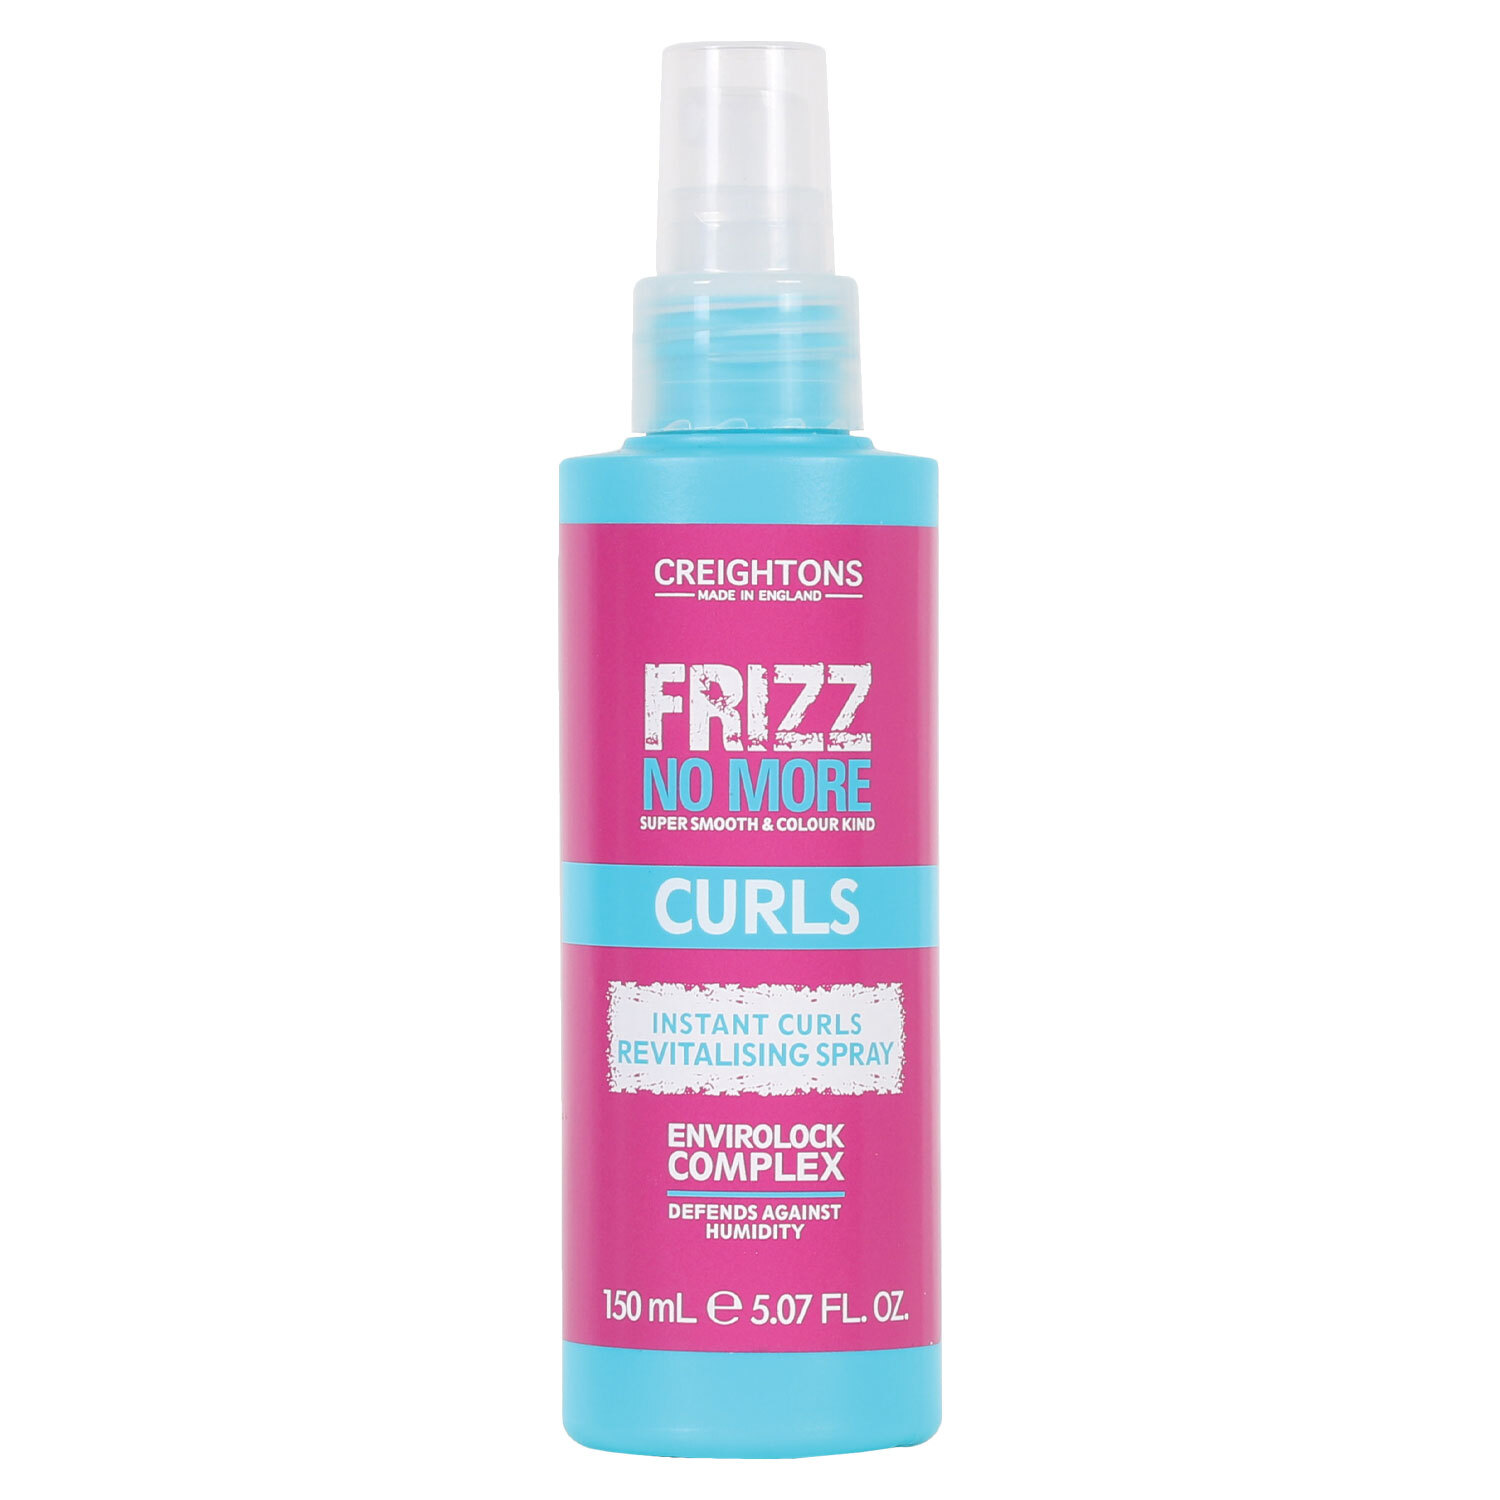 Frizz No More Curls Instant Curls Revitalising Spray 150ml Image